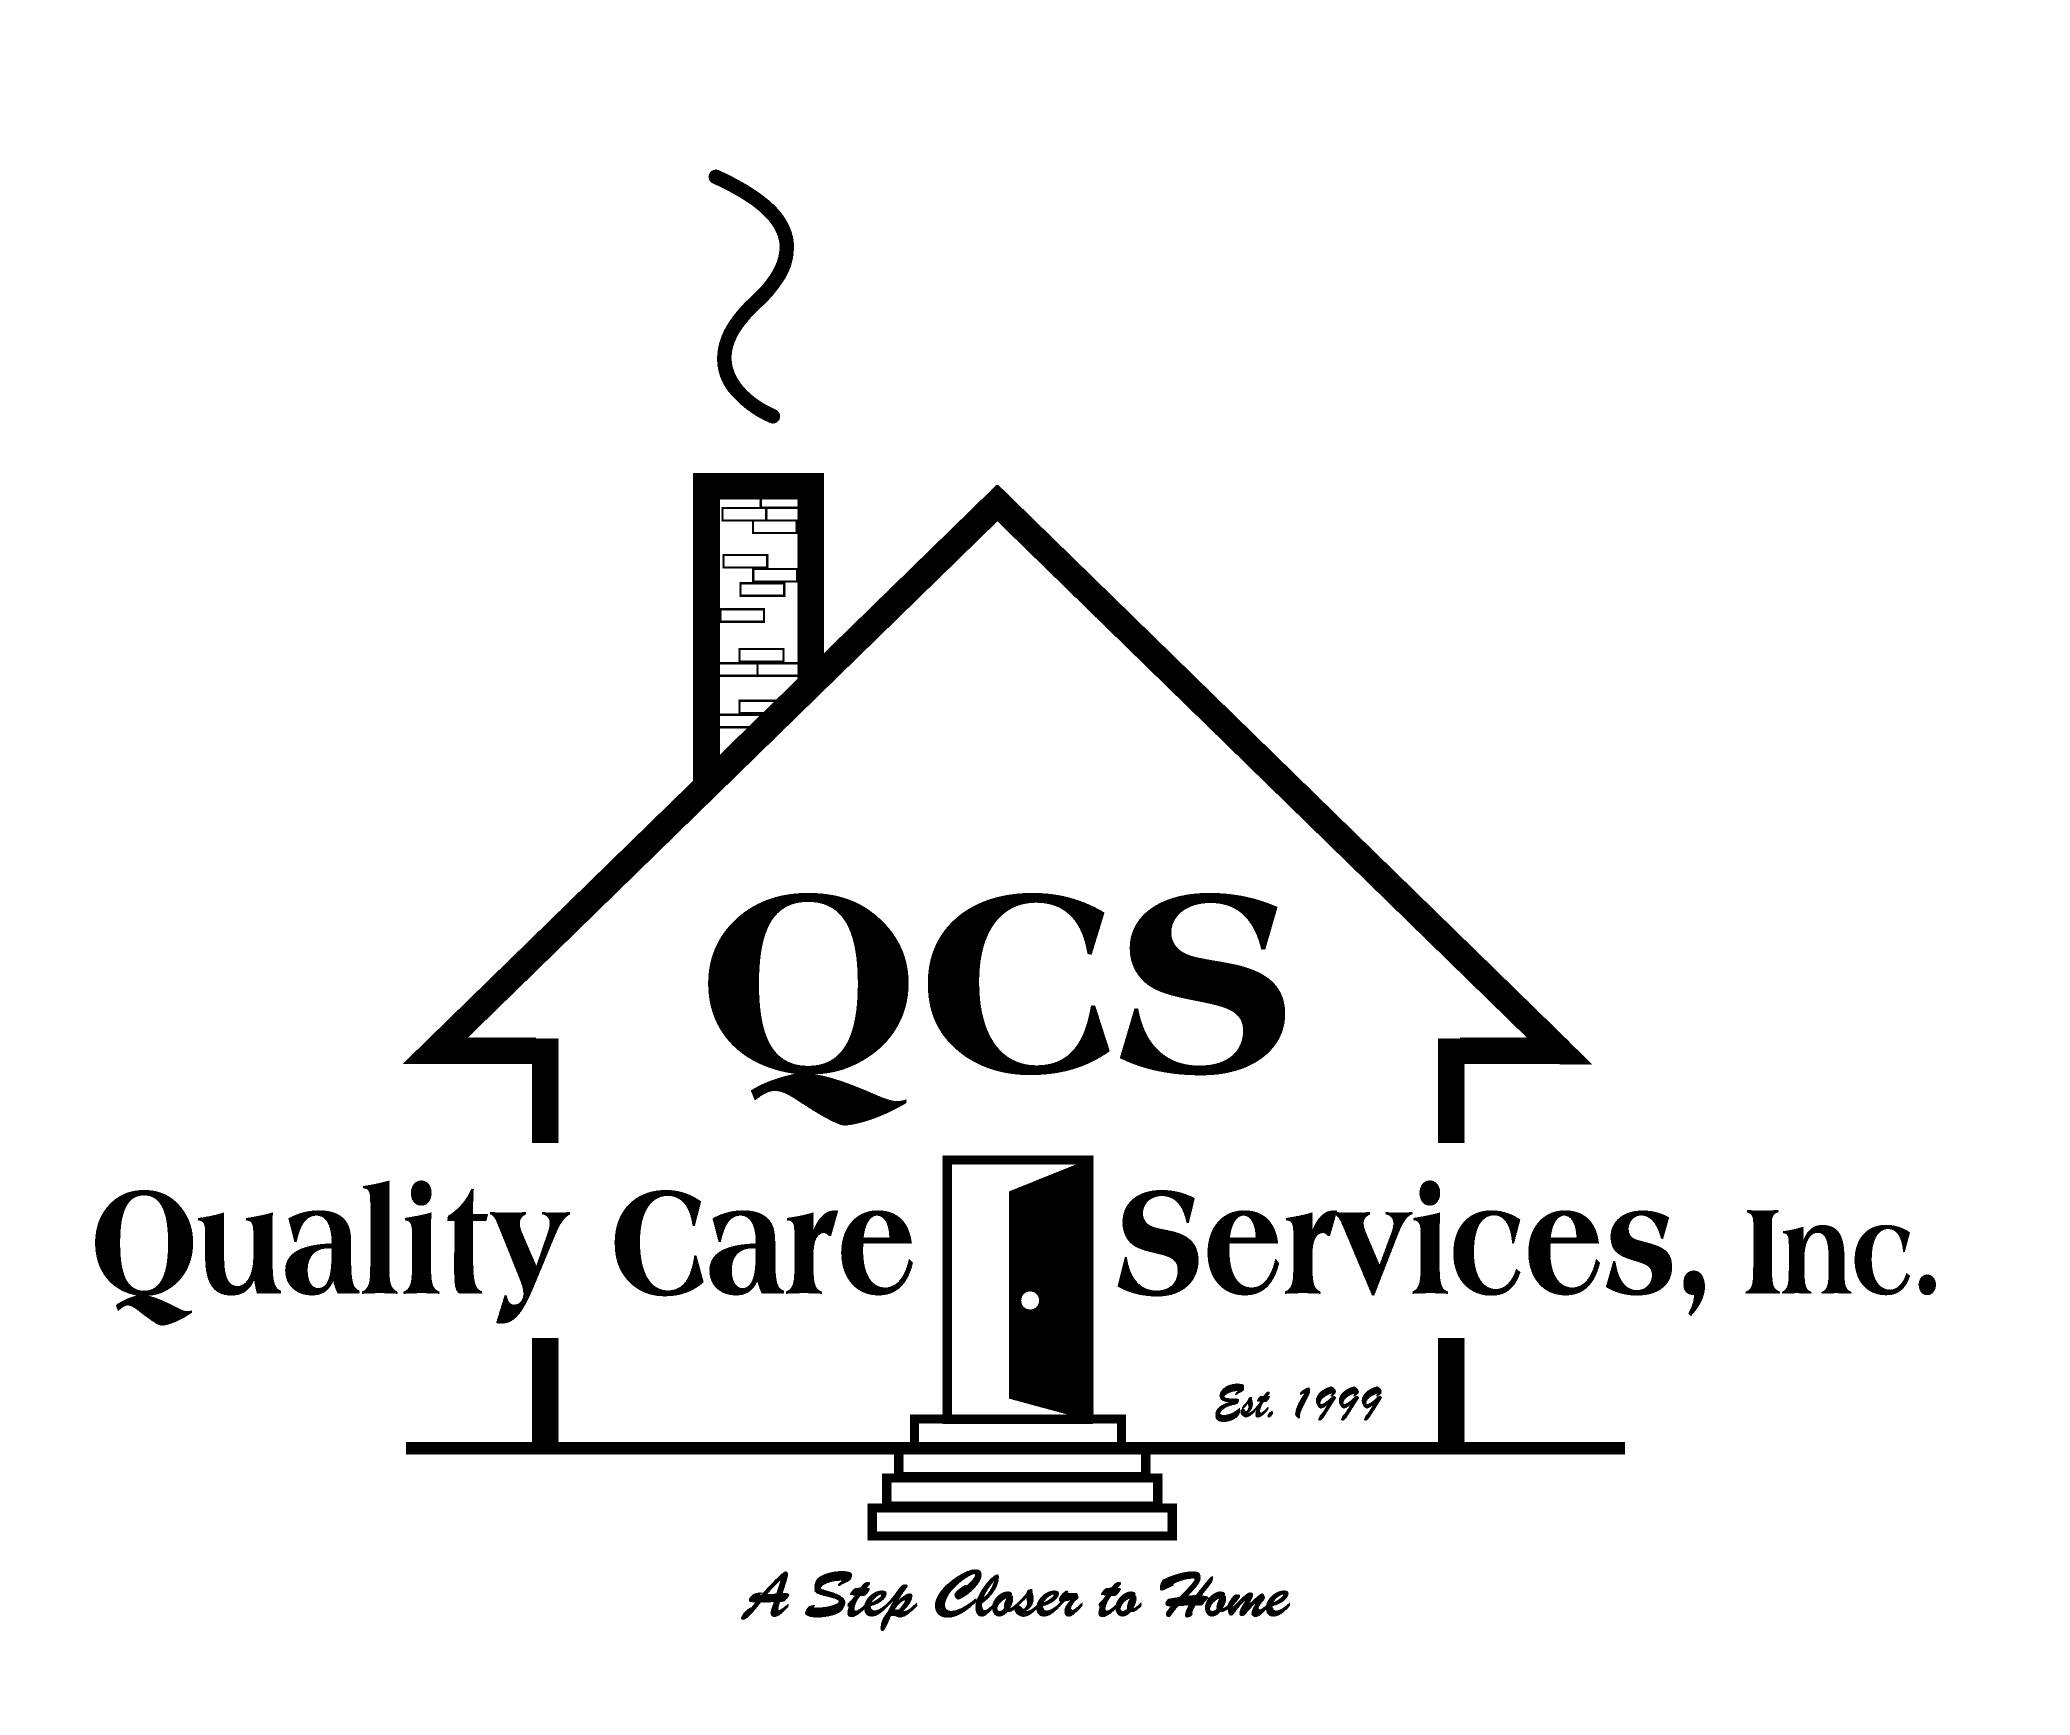 Quality Care Services Inc. 